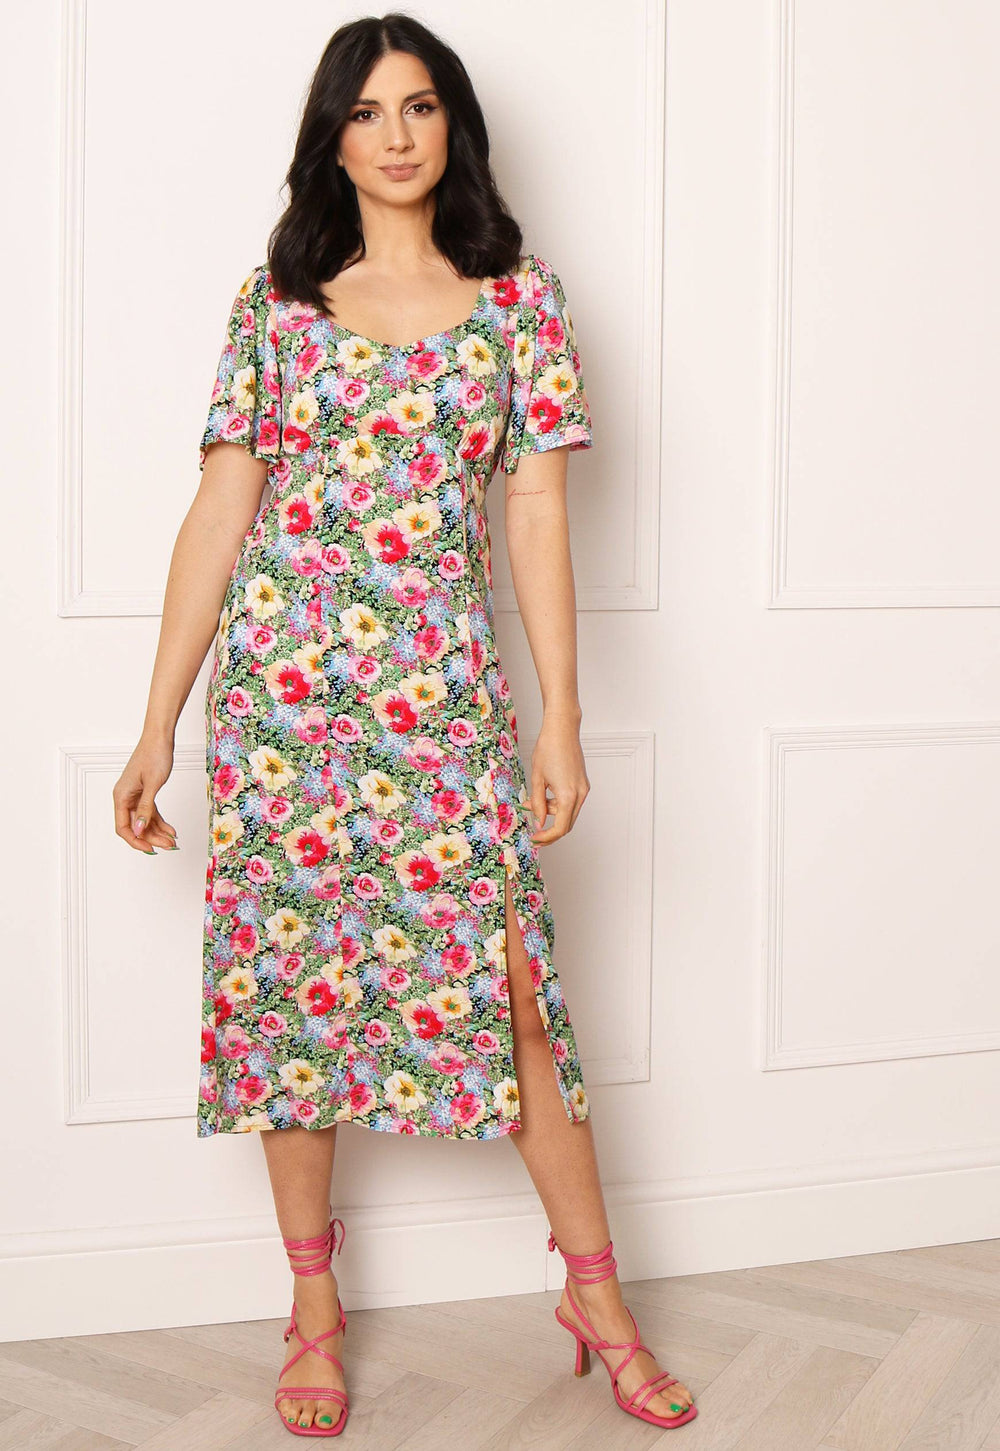 VERO MODA Easy Floral Print Sweetheart Neckline Midi Tea Dress in Pink, Yellow & Green - One Nation Clothing